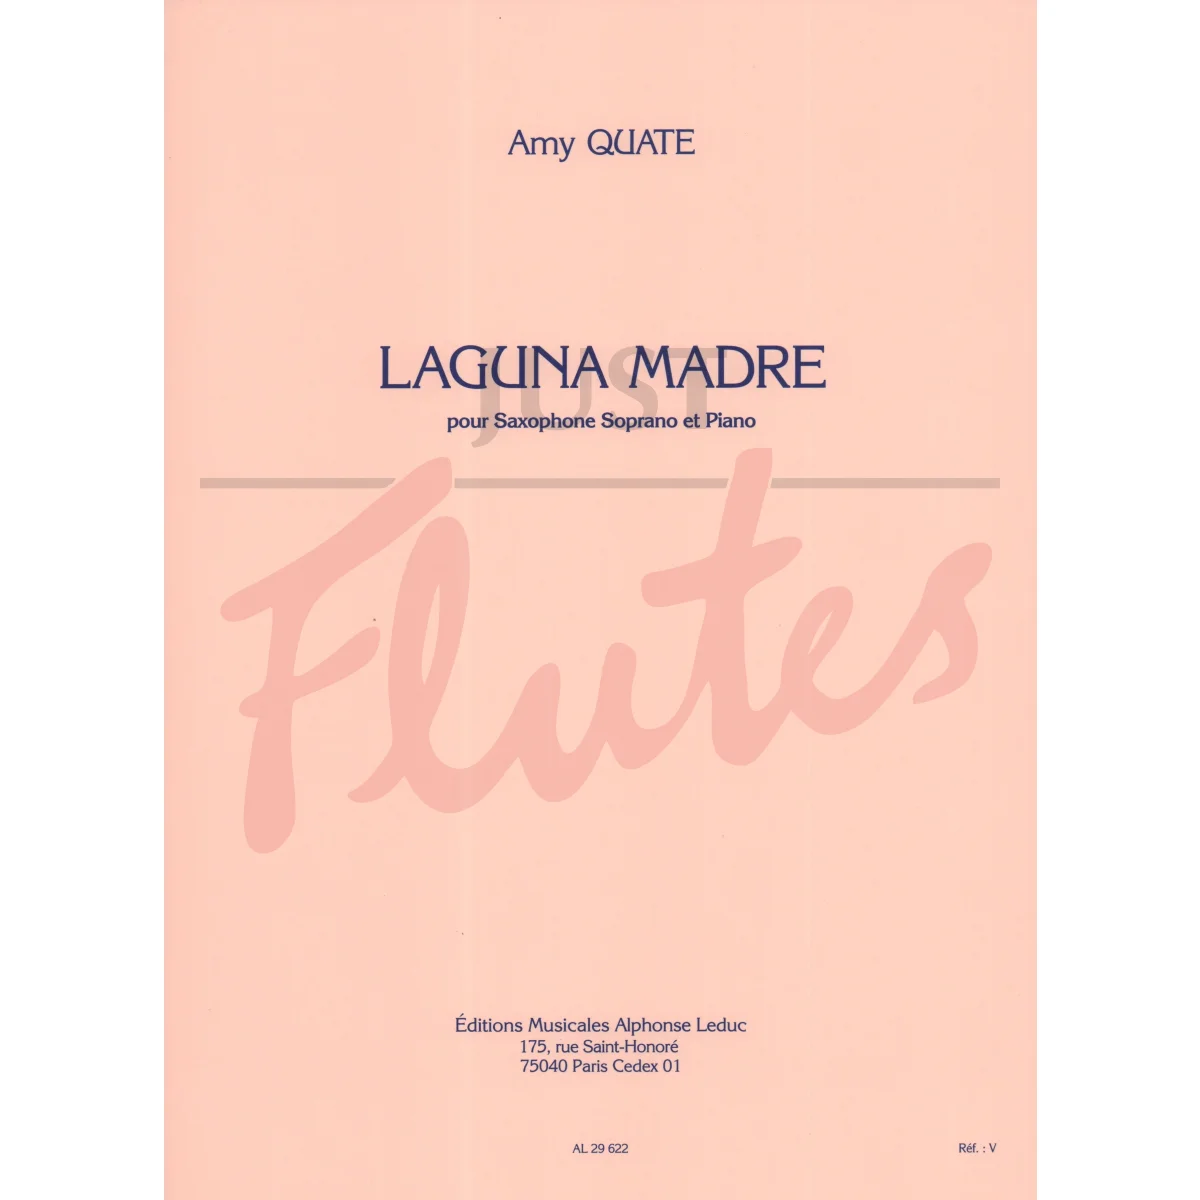 Laguna Madre for Soprano Saxophone and Piano